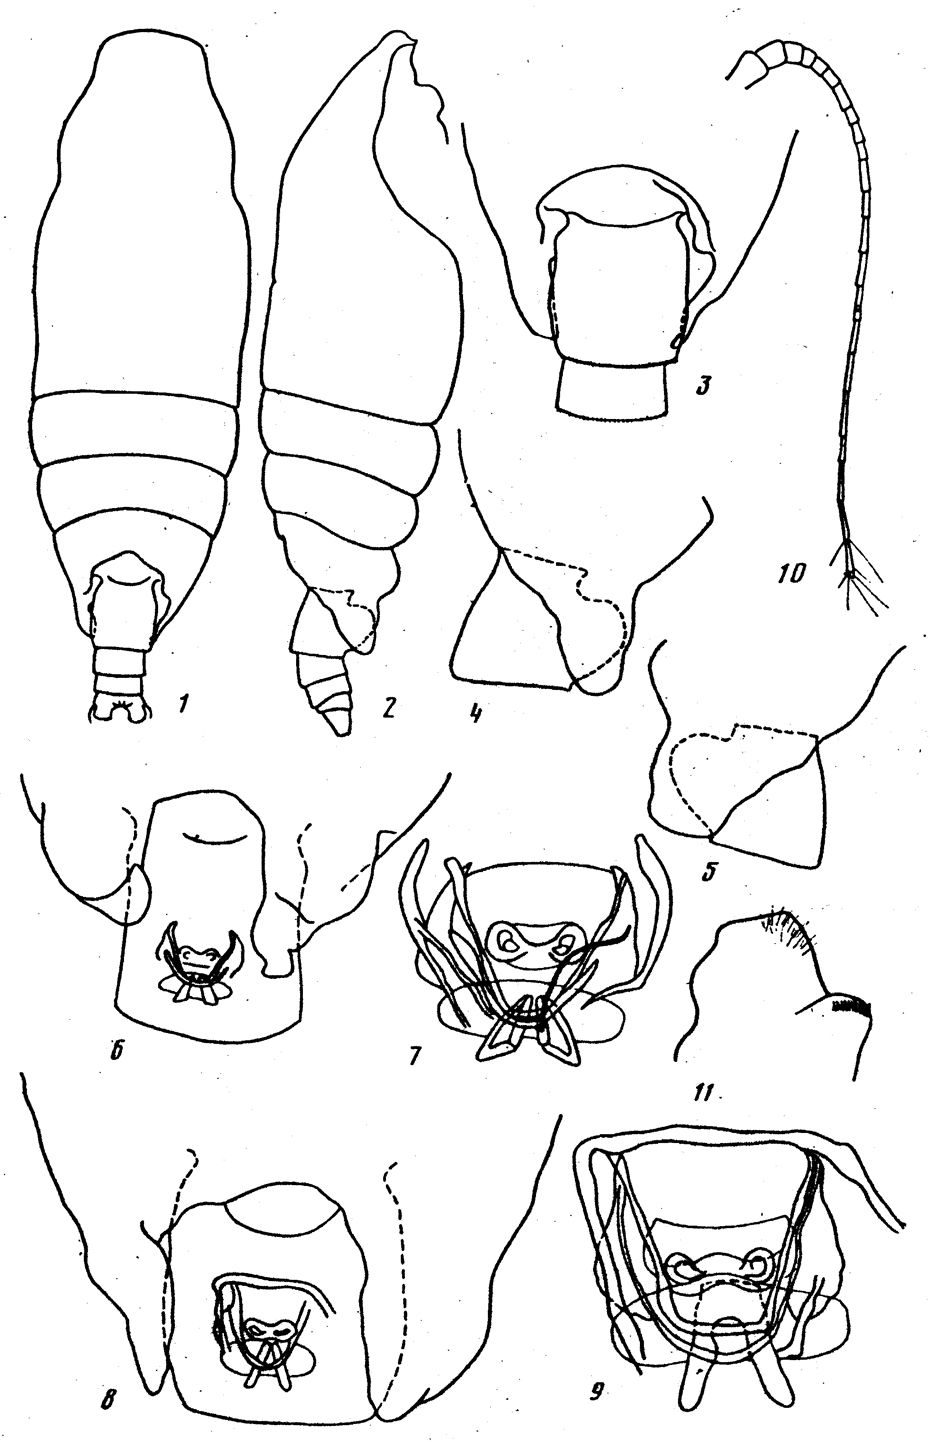 Species Batheuchaeta lamellata - Plate 8 of morphological figures